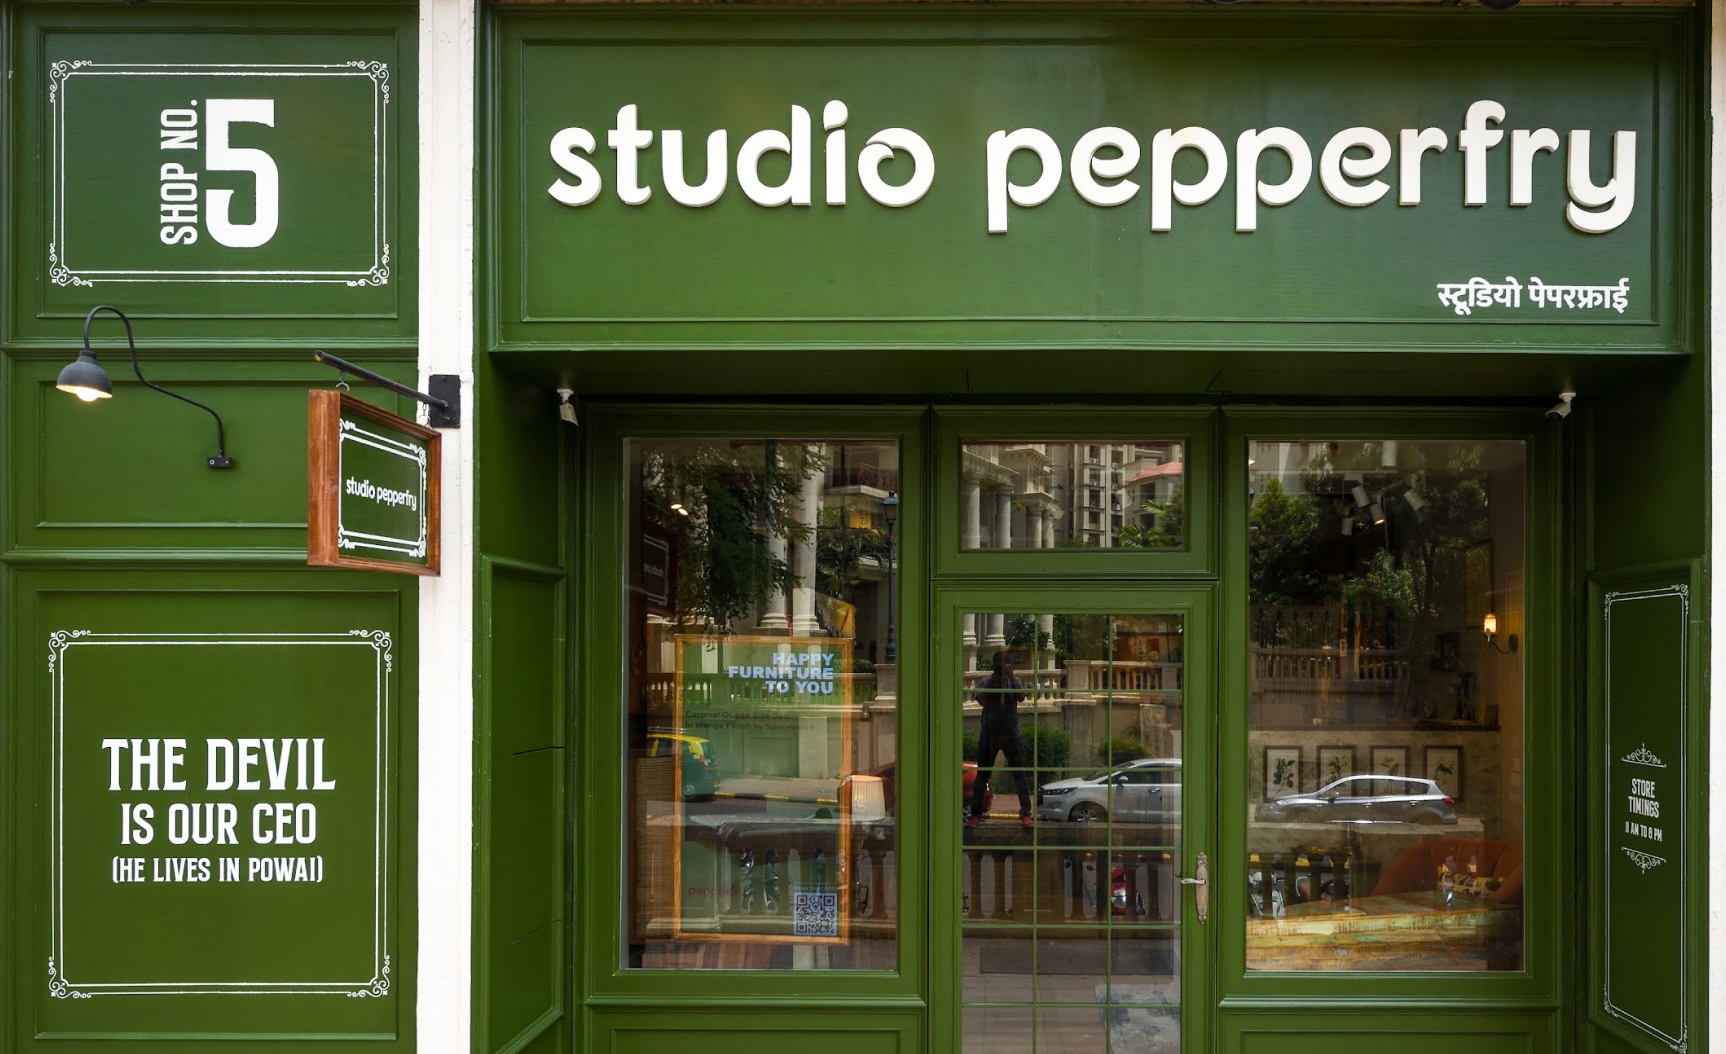 Studio Pepperfry - Powai, Mumbai